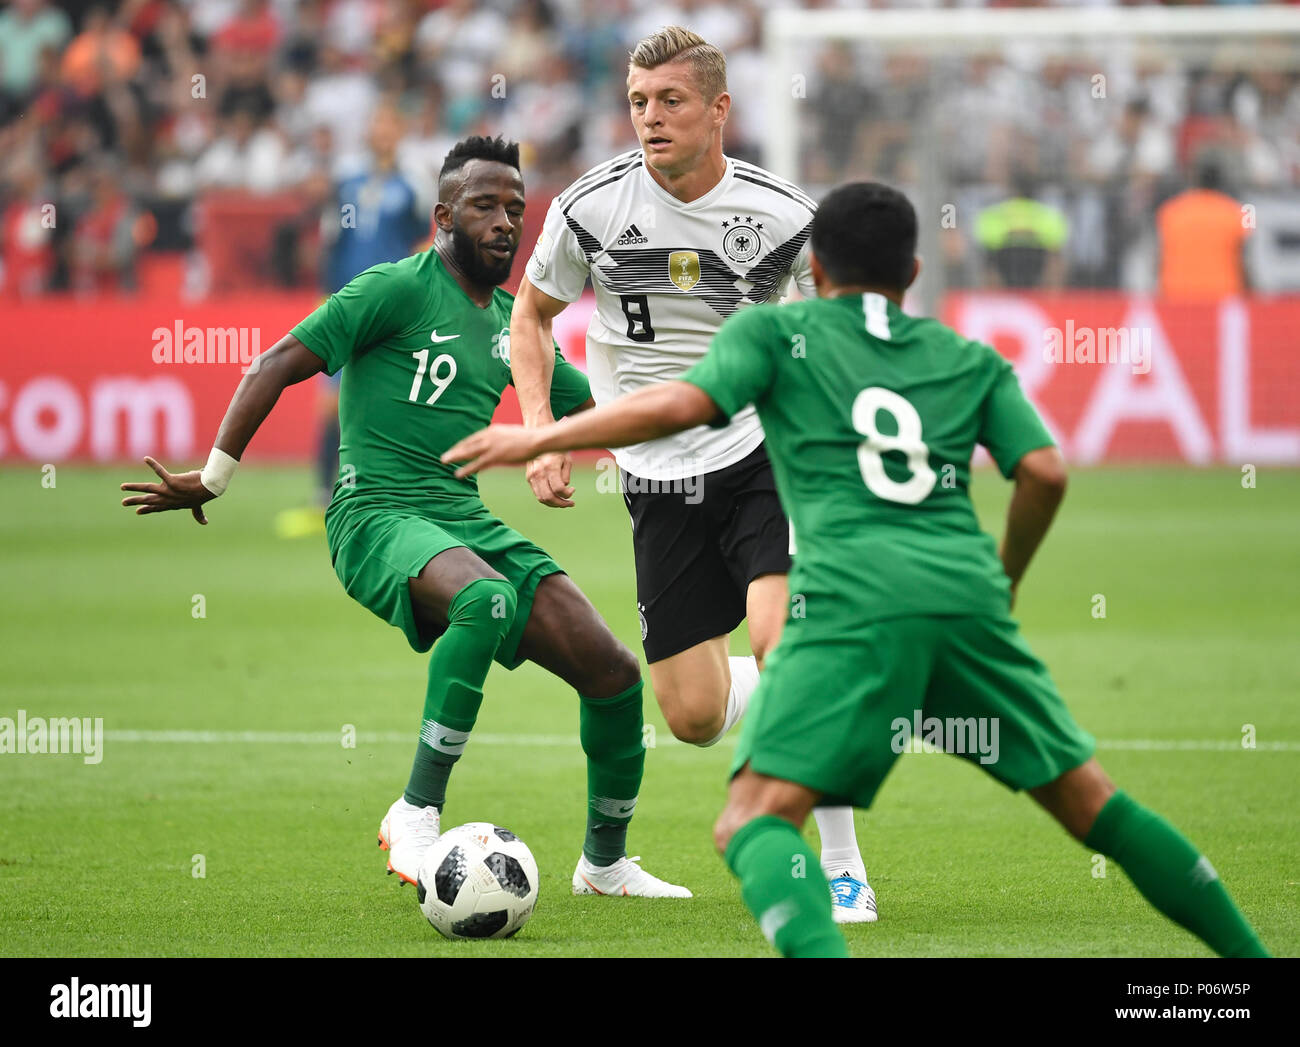 08 June 2018, Germany, Leverkusen: Football international friendly, Germany vs Saudi Arabia at the BayArena. Germany' Toni Kroos (c) and Saudi's Fahad Al-Muwallad and Saudi's Yahia Al-Shehri in action. Photo: Ina Fassbender/dpa Stock Photo